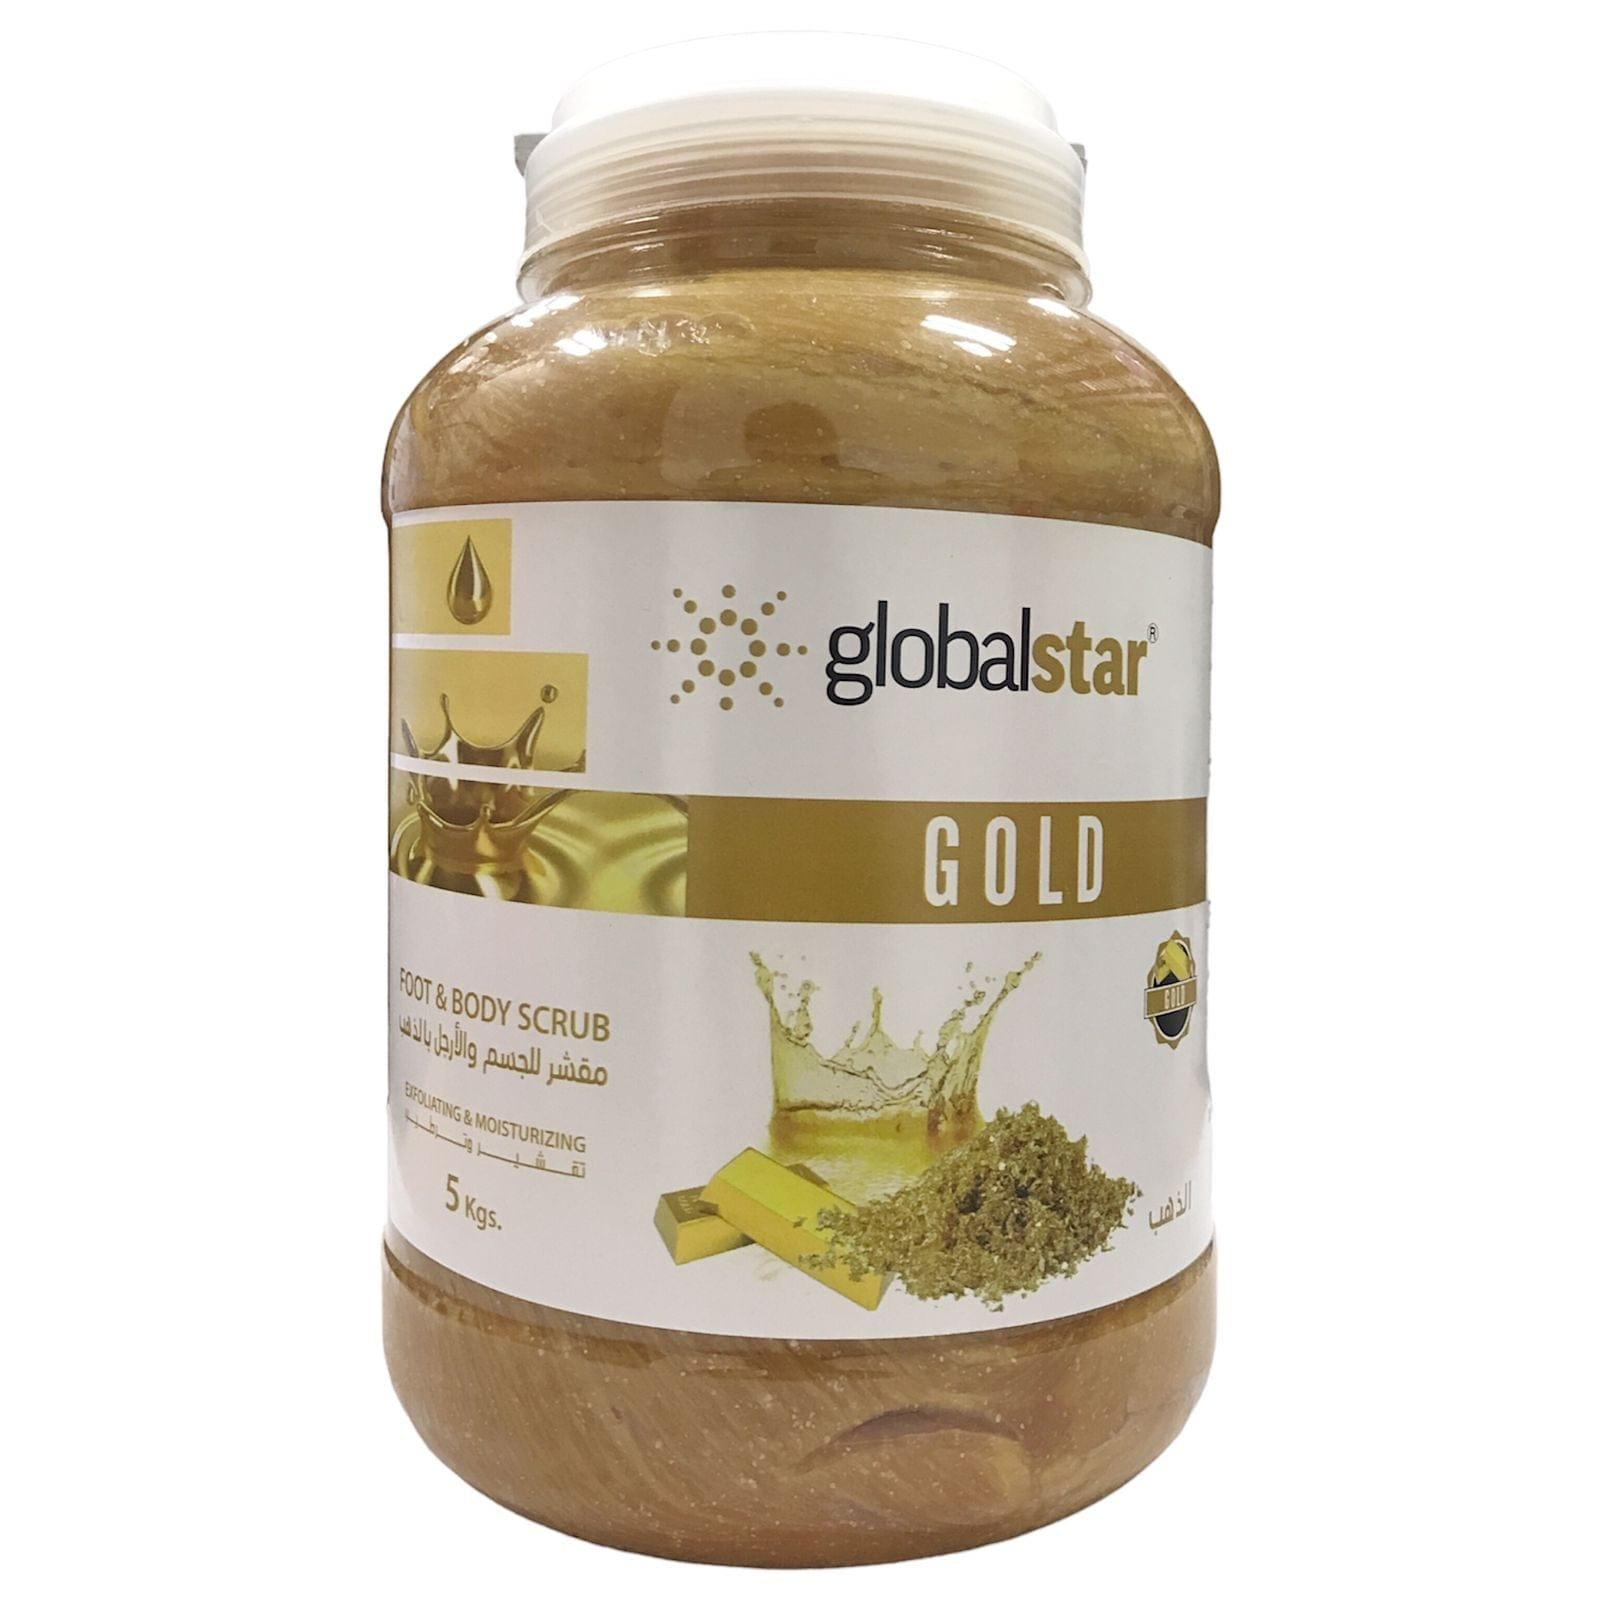 Globalstar Exfoliating Foot And Body Scrub Gold 5kg